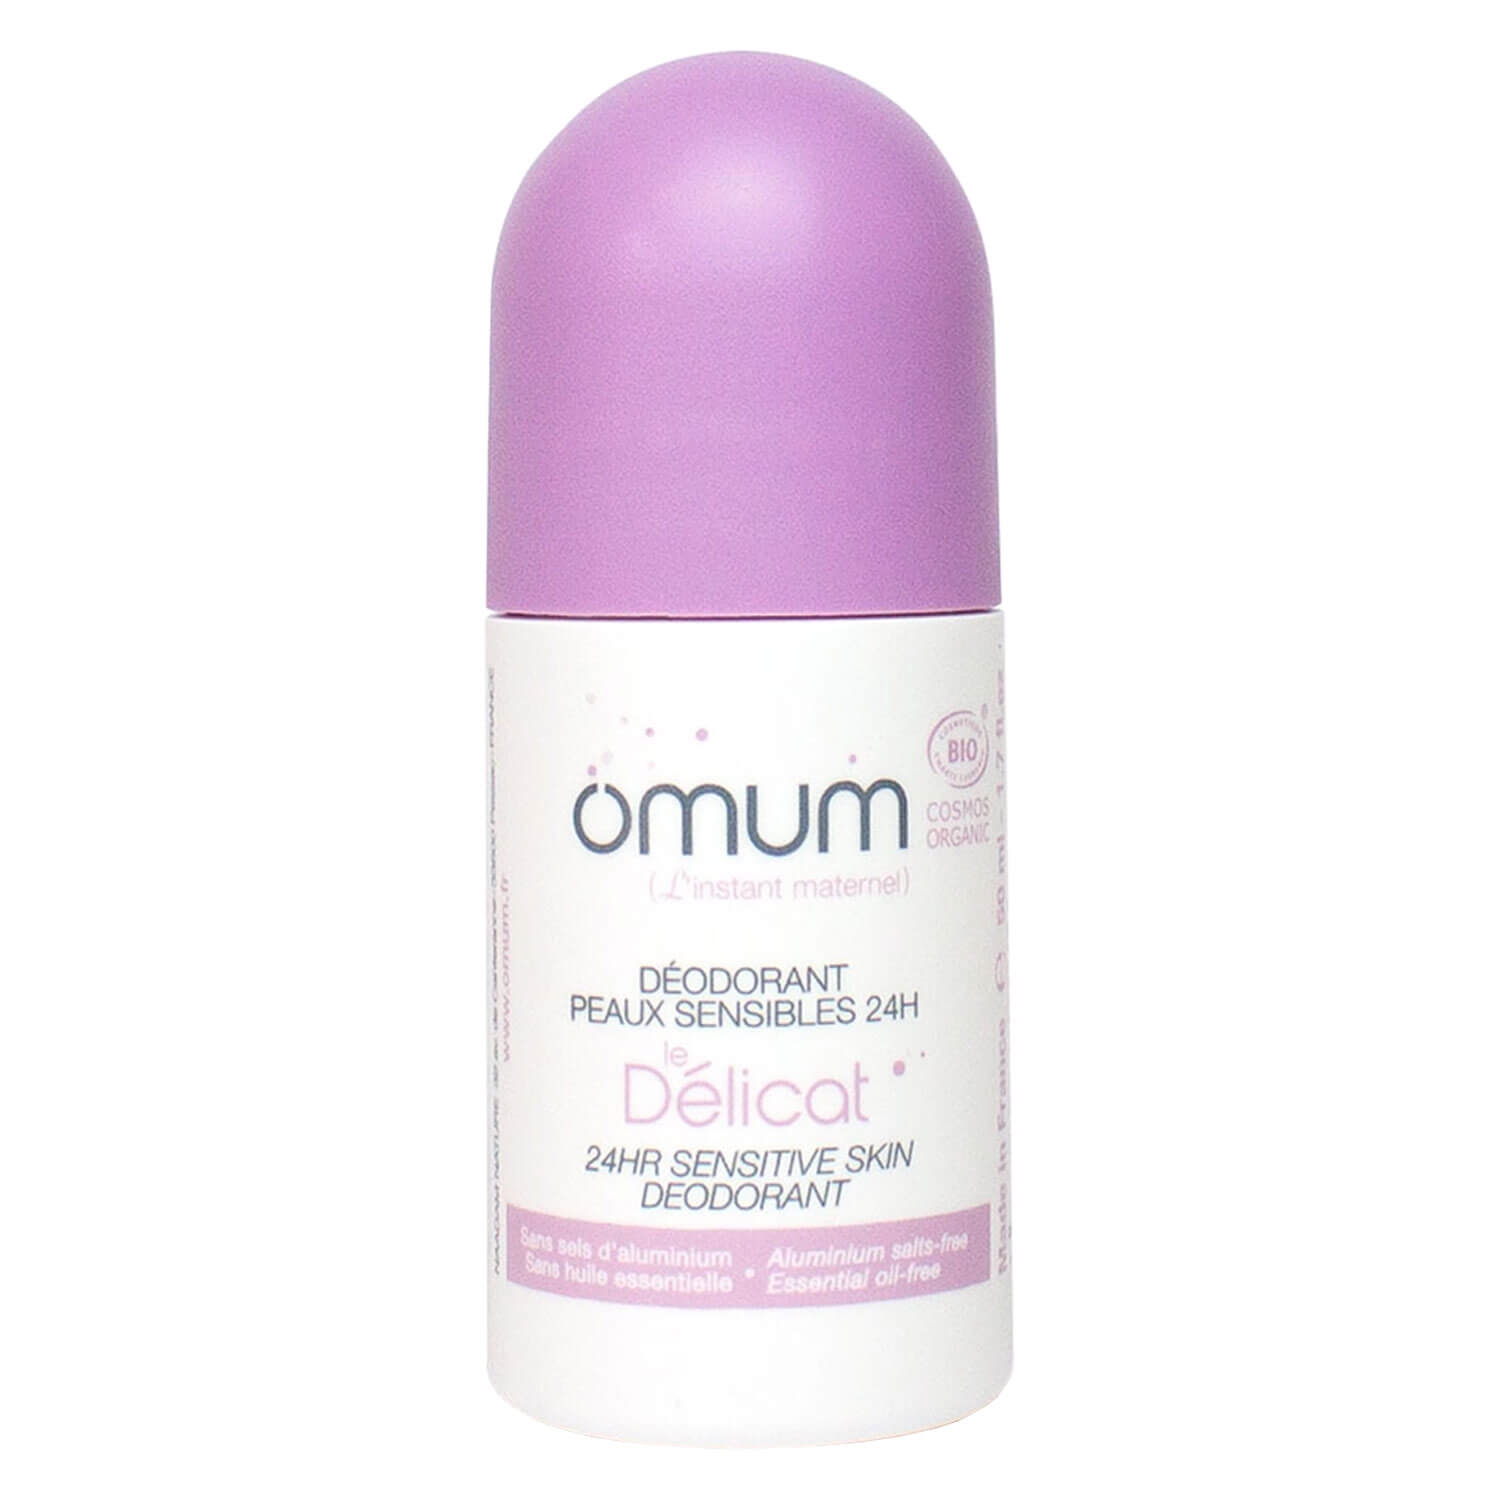 Produktbild von omum - Le Délicat 24HR Sensitive Skin Deodorant